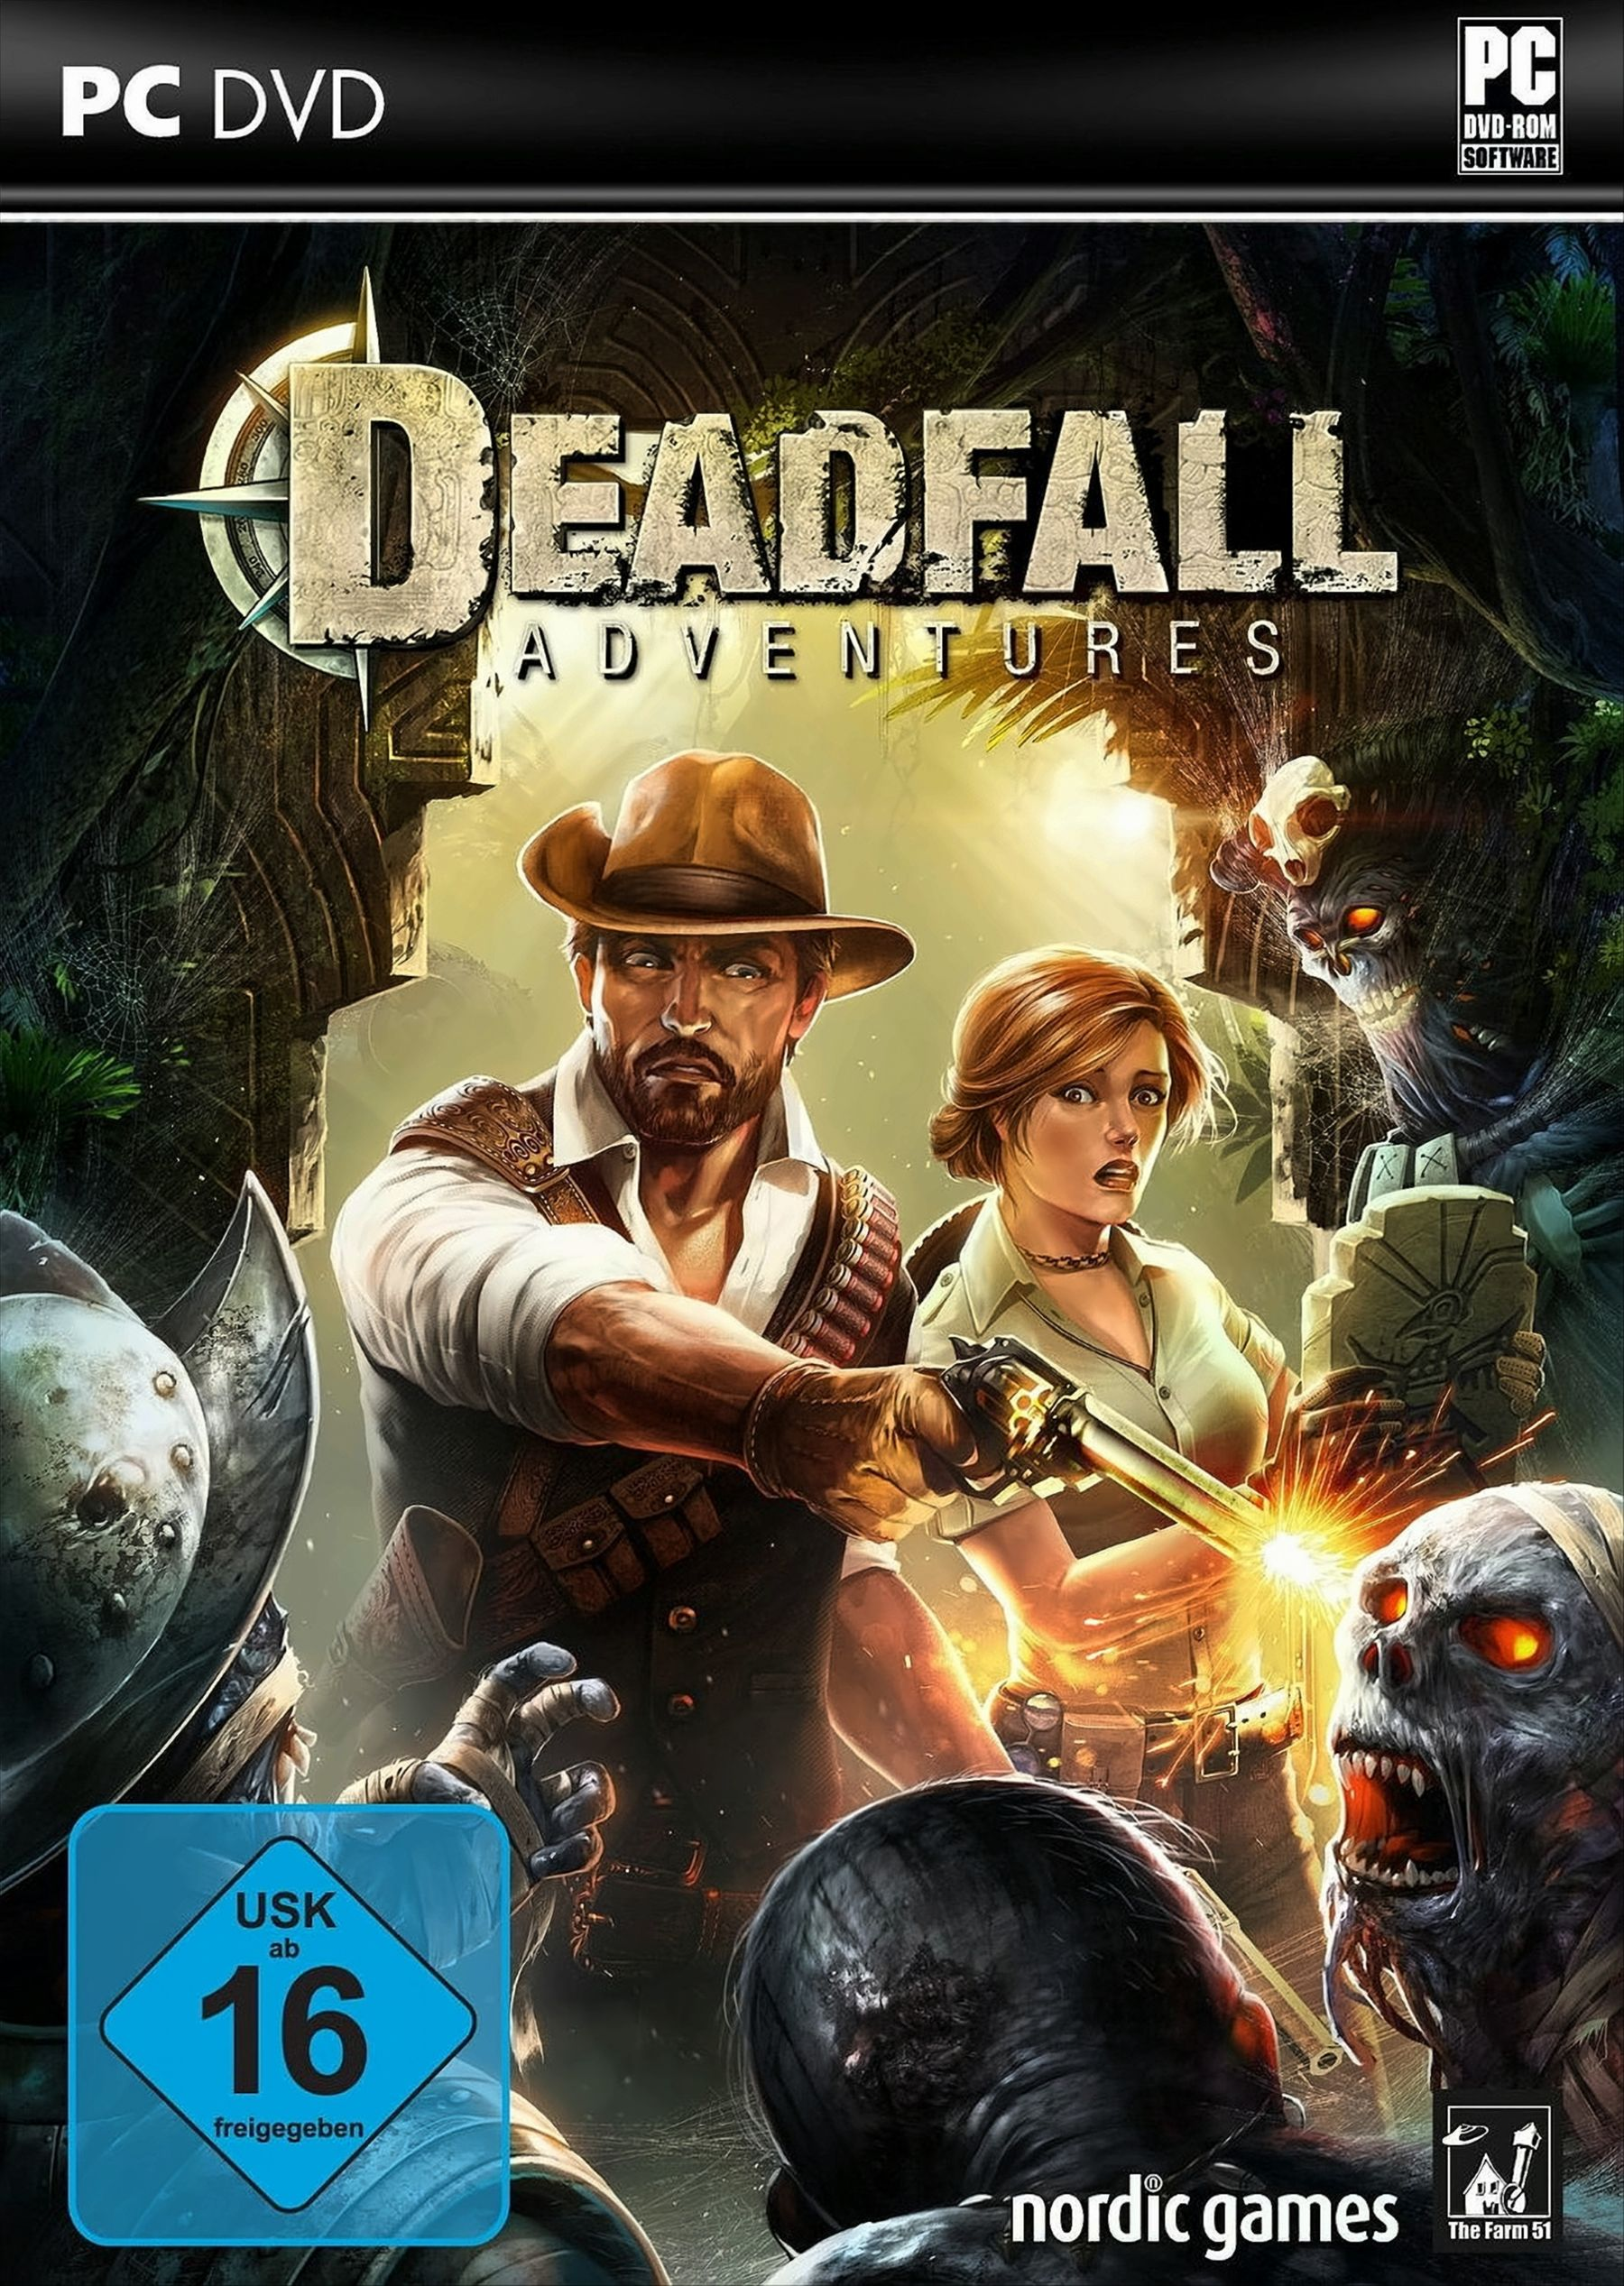 Deadfall Adventures [PC] 